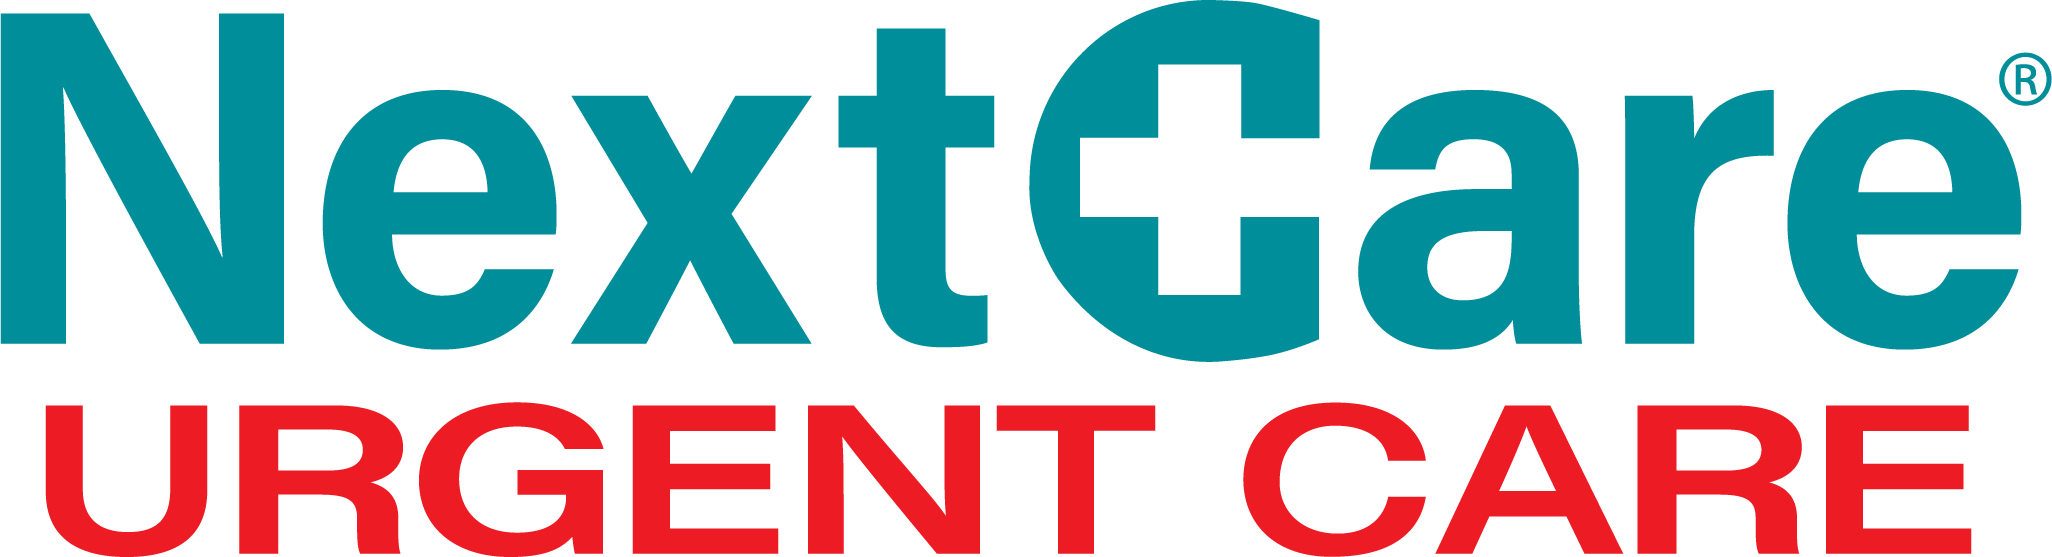 NextCare Urgent Care - Village Logo